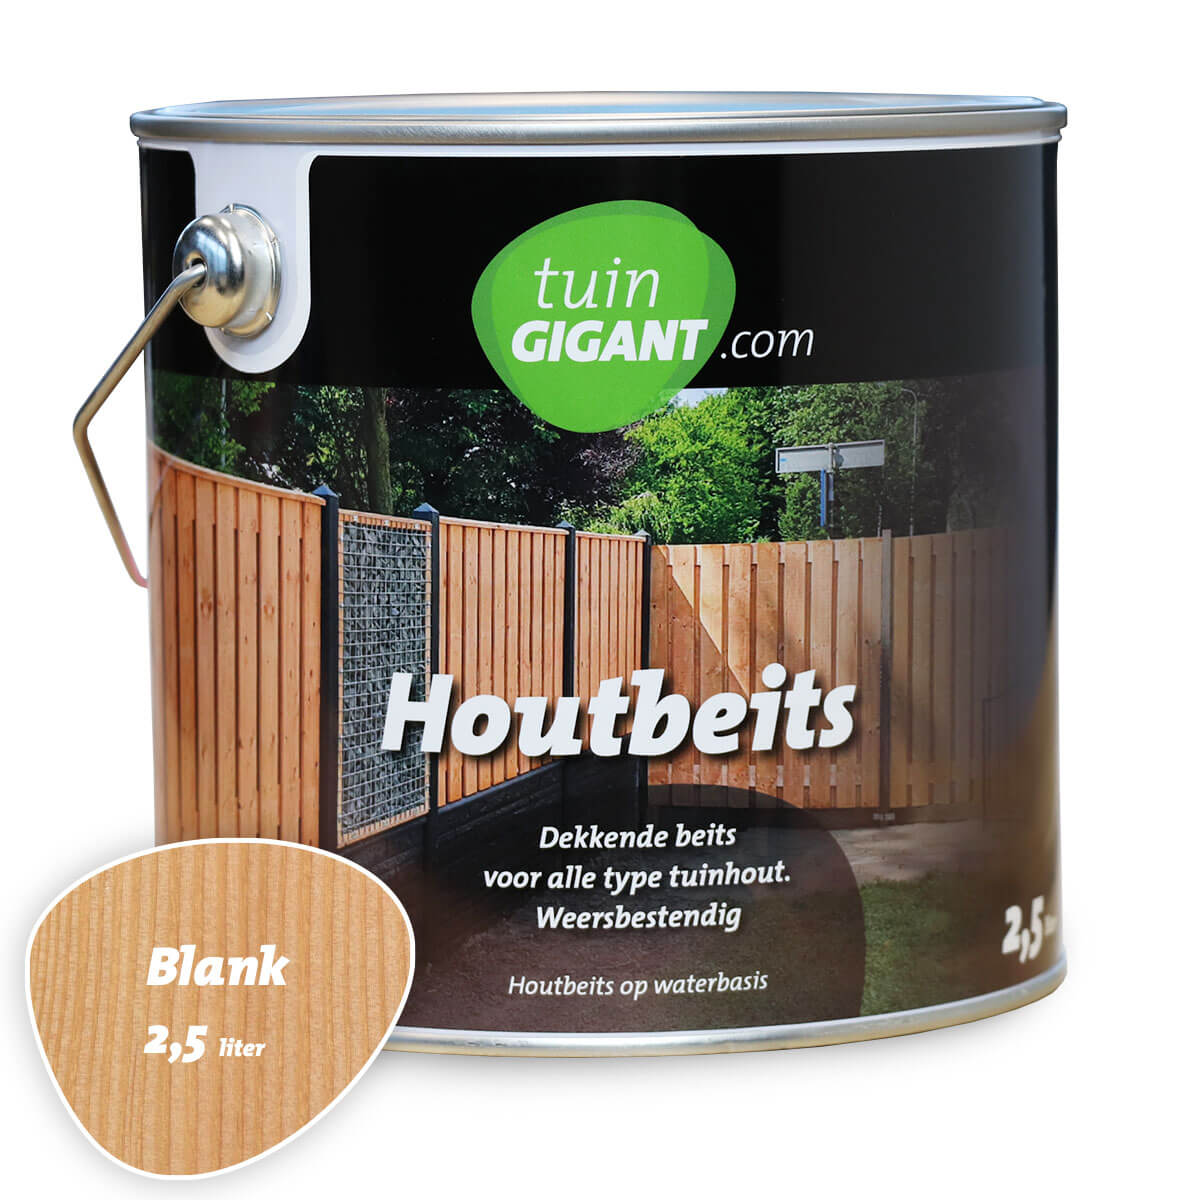 Claire medeklinker Investeren Houtbeits - Blank - 1 tot 2,5 liter - Tuingigant.com